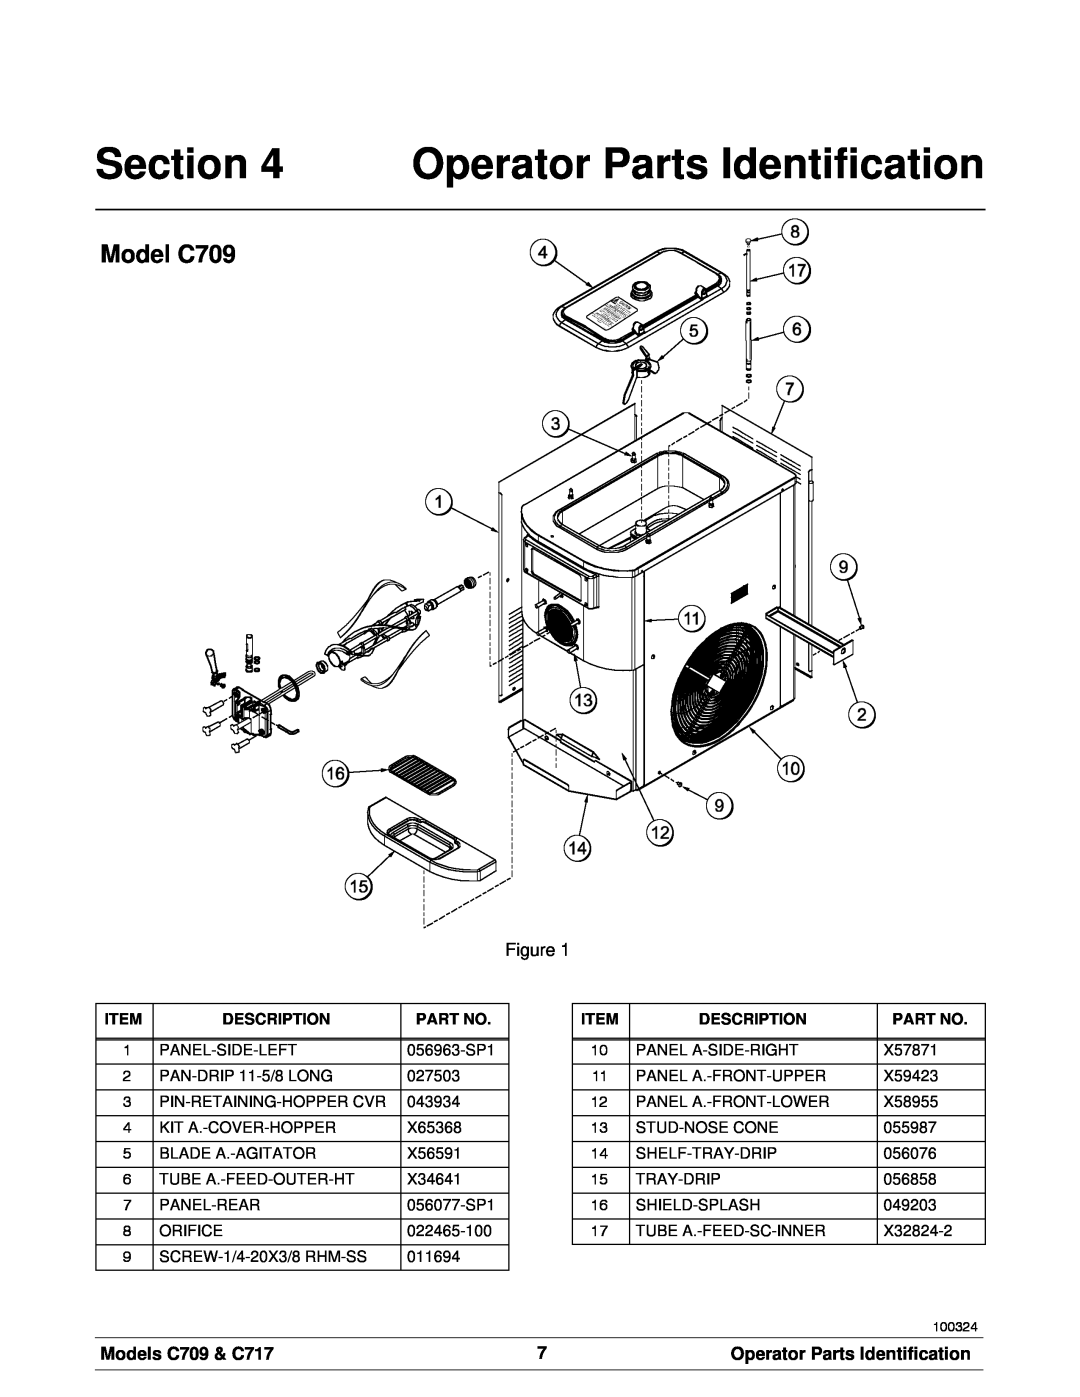 Taylor manual Operator Parts Identification, Model C709, Models C709 & C717, Description 